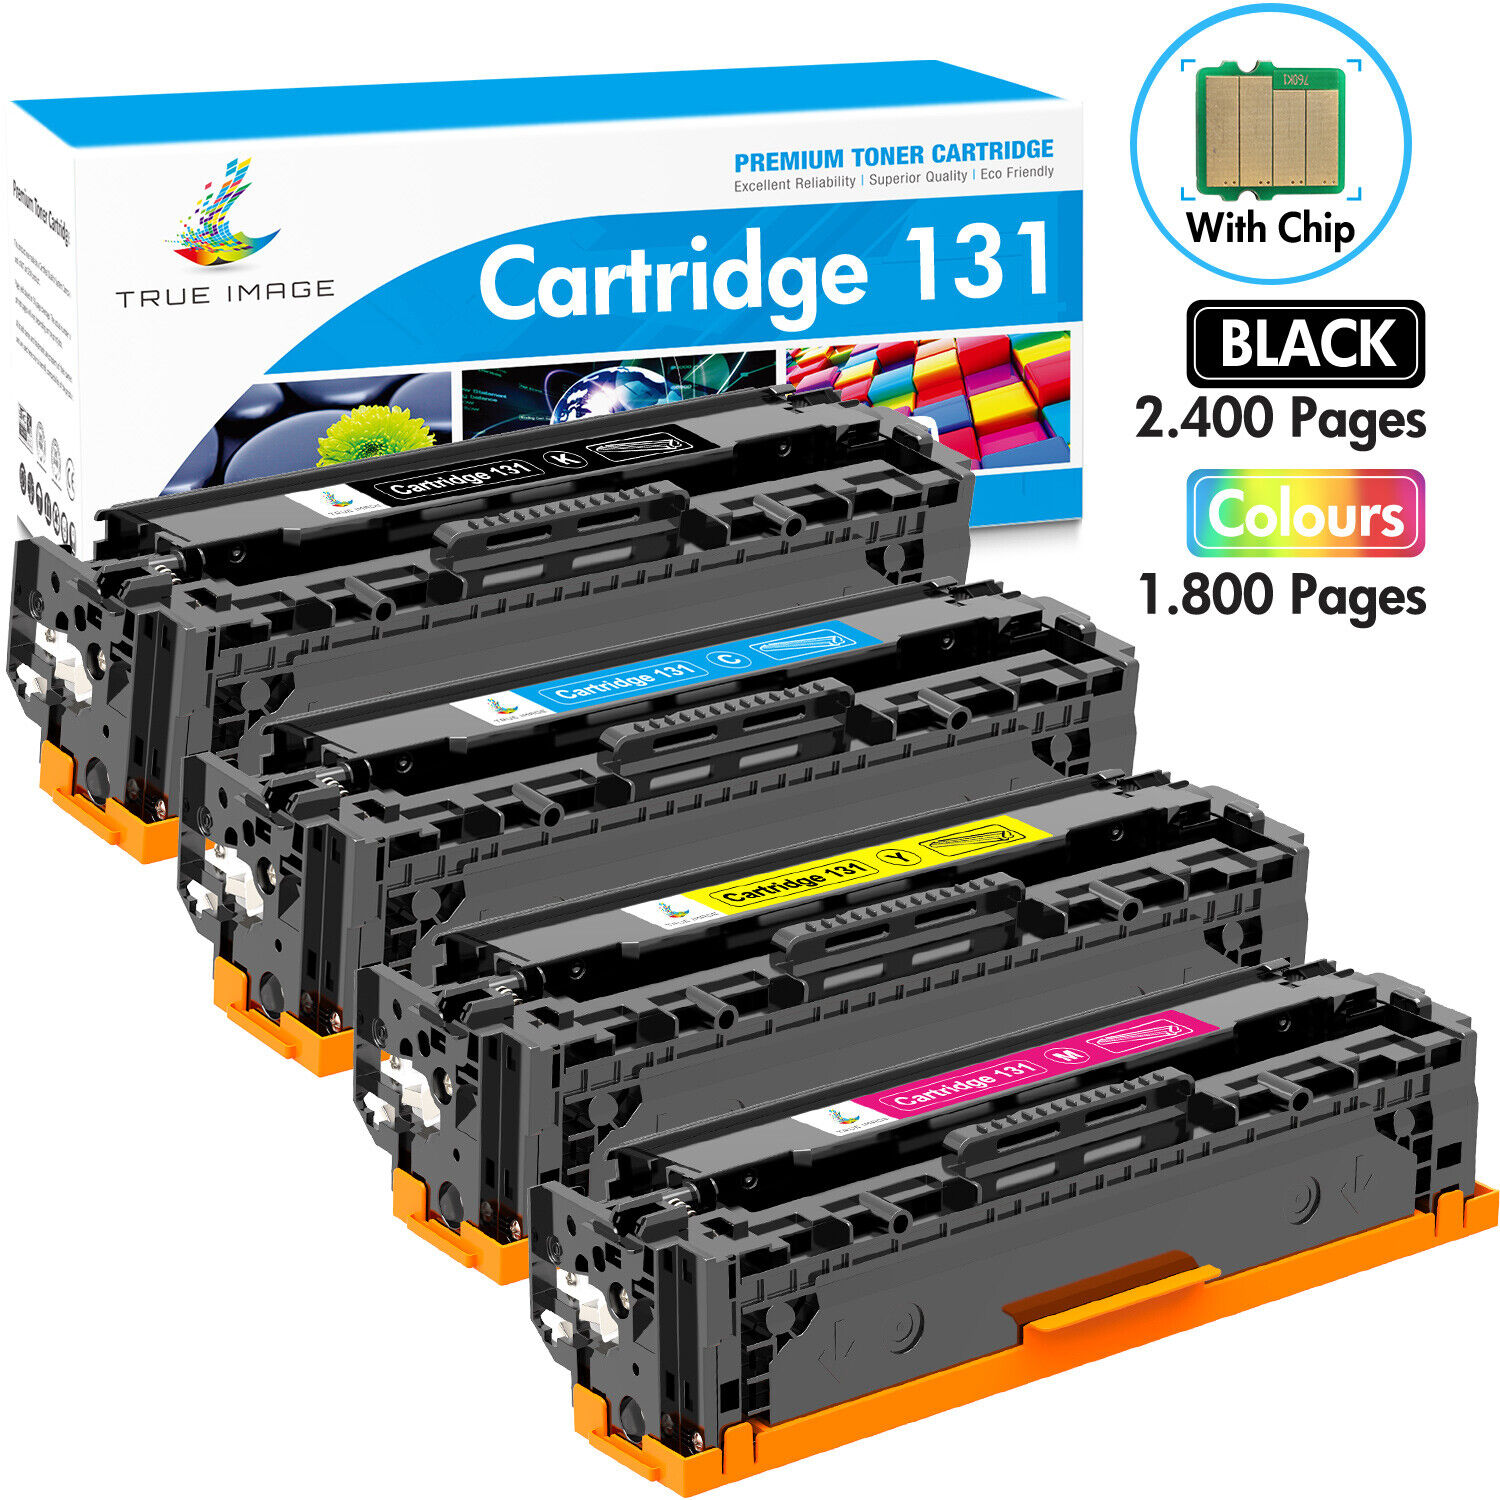 CRG131 Toner Black Color Set For Canon 131 ImageCLASS MF8280Cw MF624Cw 628Cw Lot